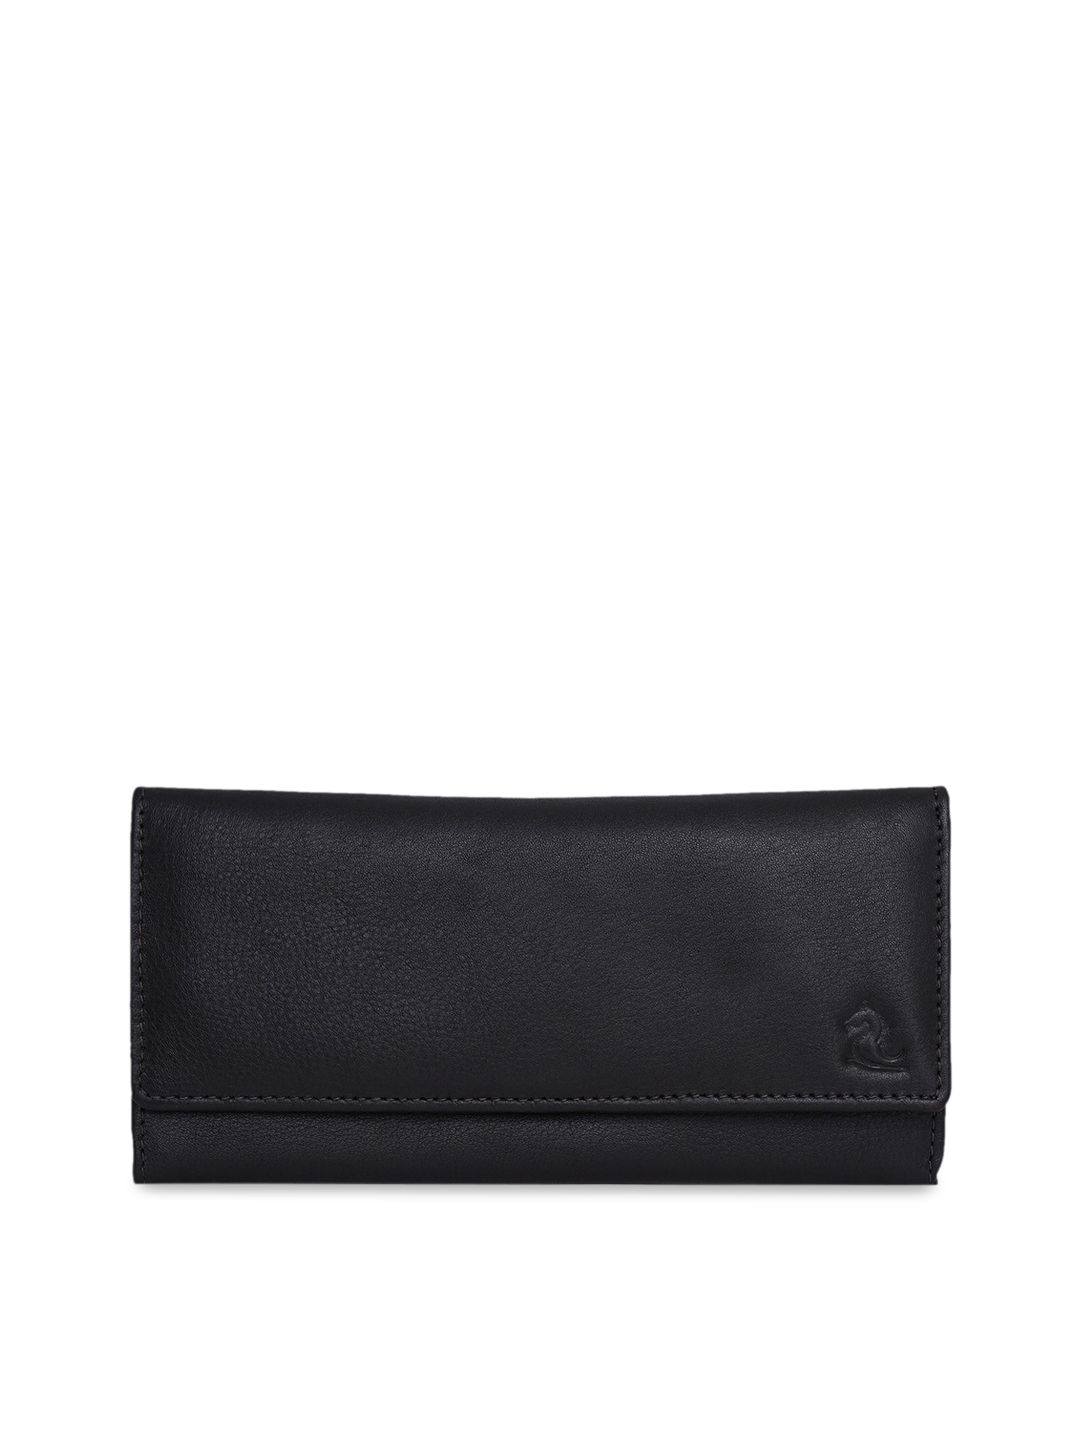 Kara Women Black Solid Leather Wallet Price in India